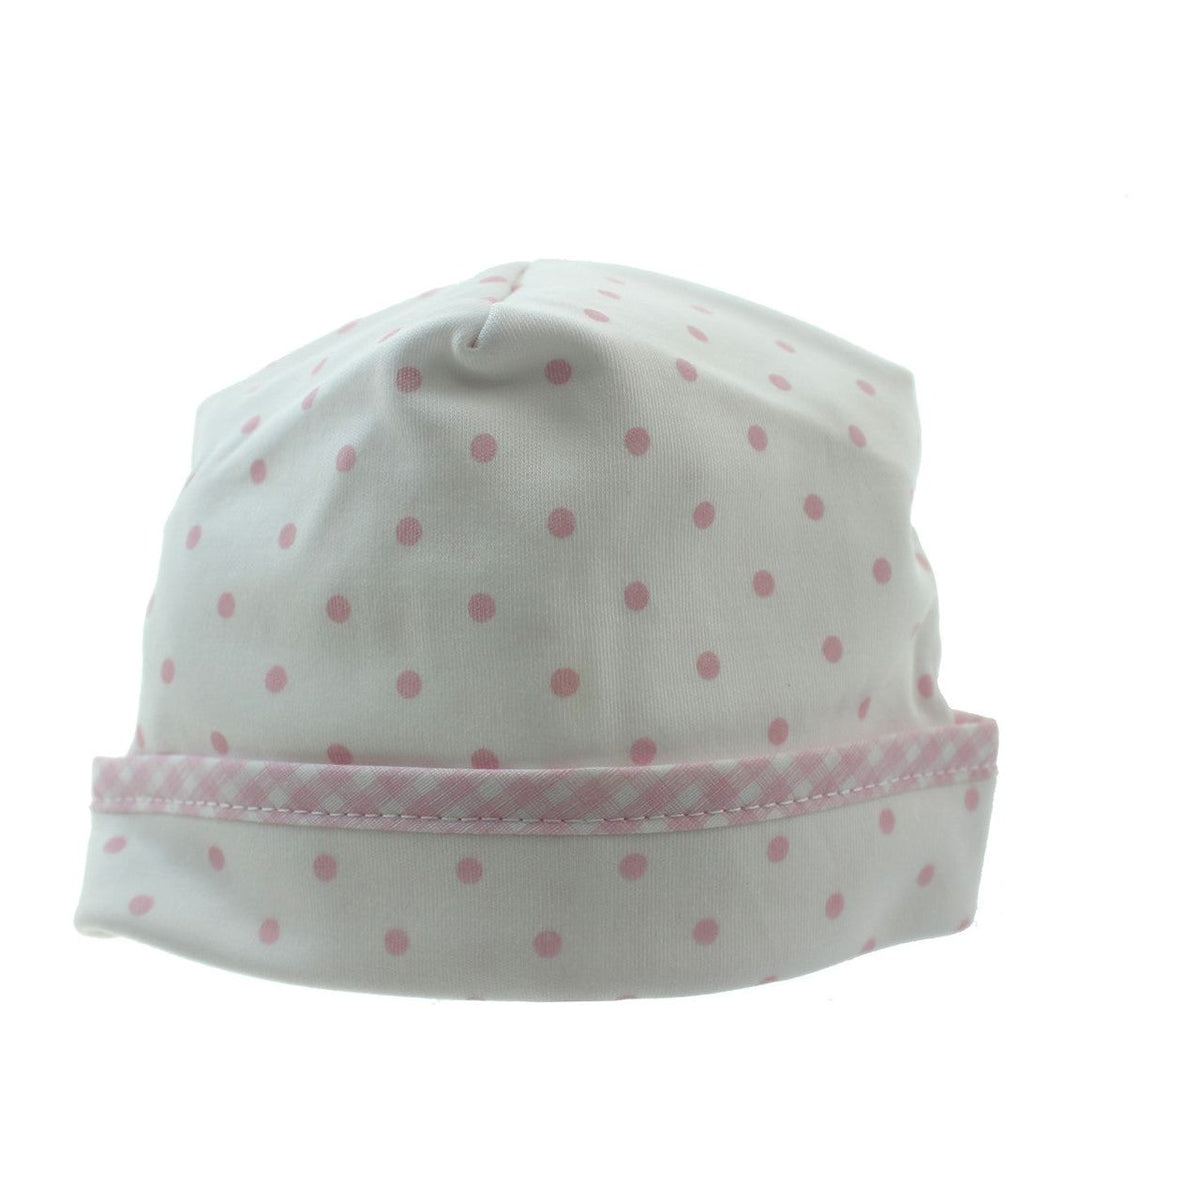 Newborn Girls Pink Dot Take Home Hat |